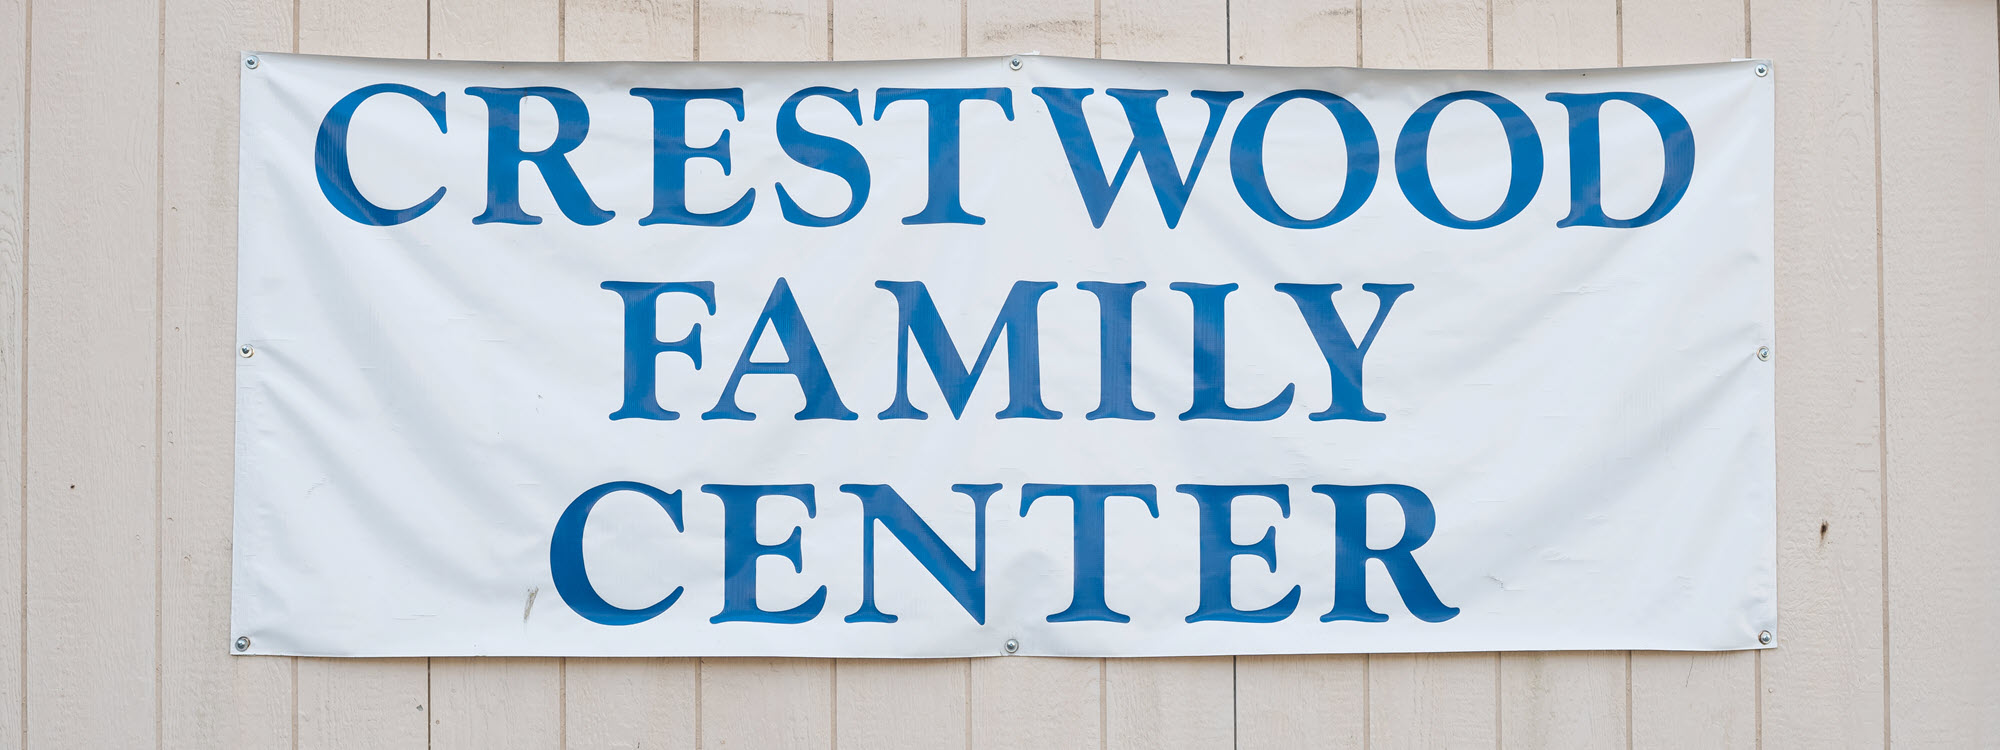 Crestwood Family Center banner